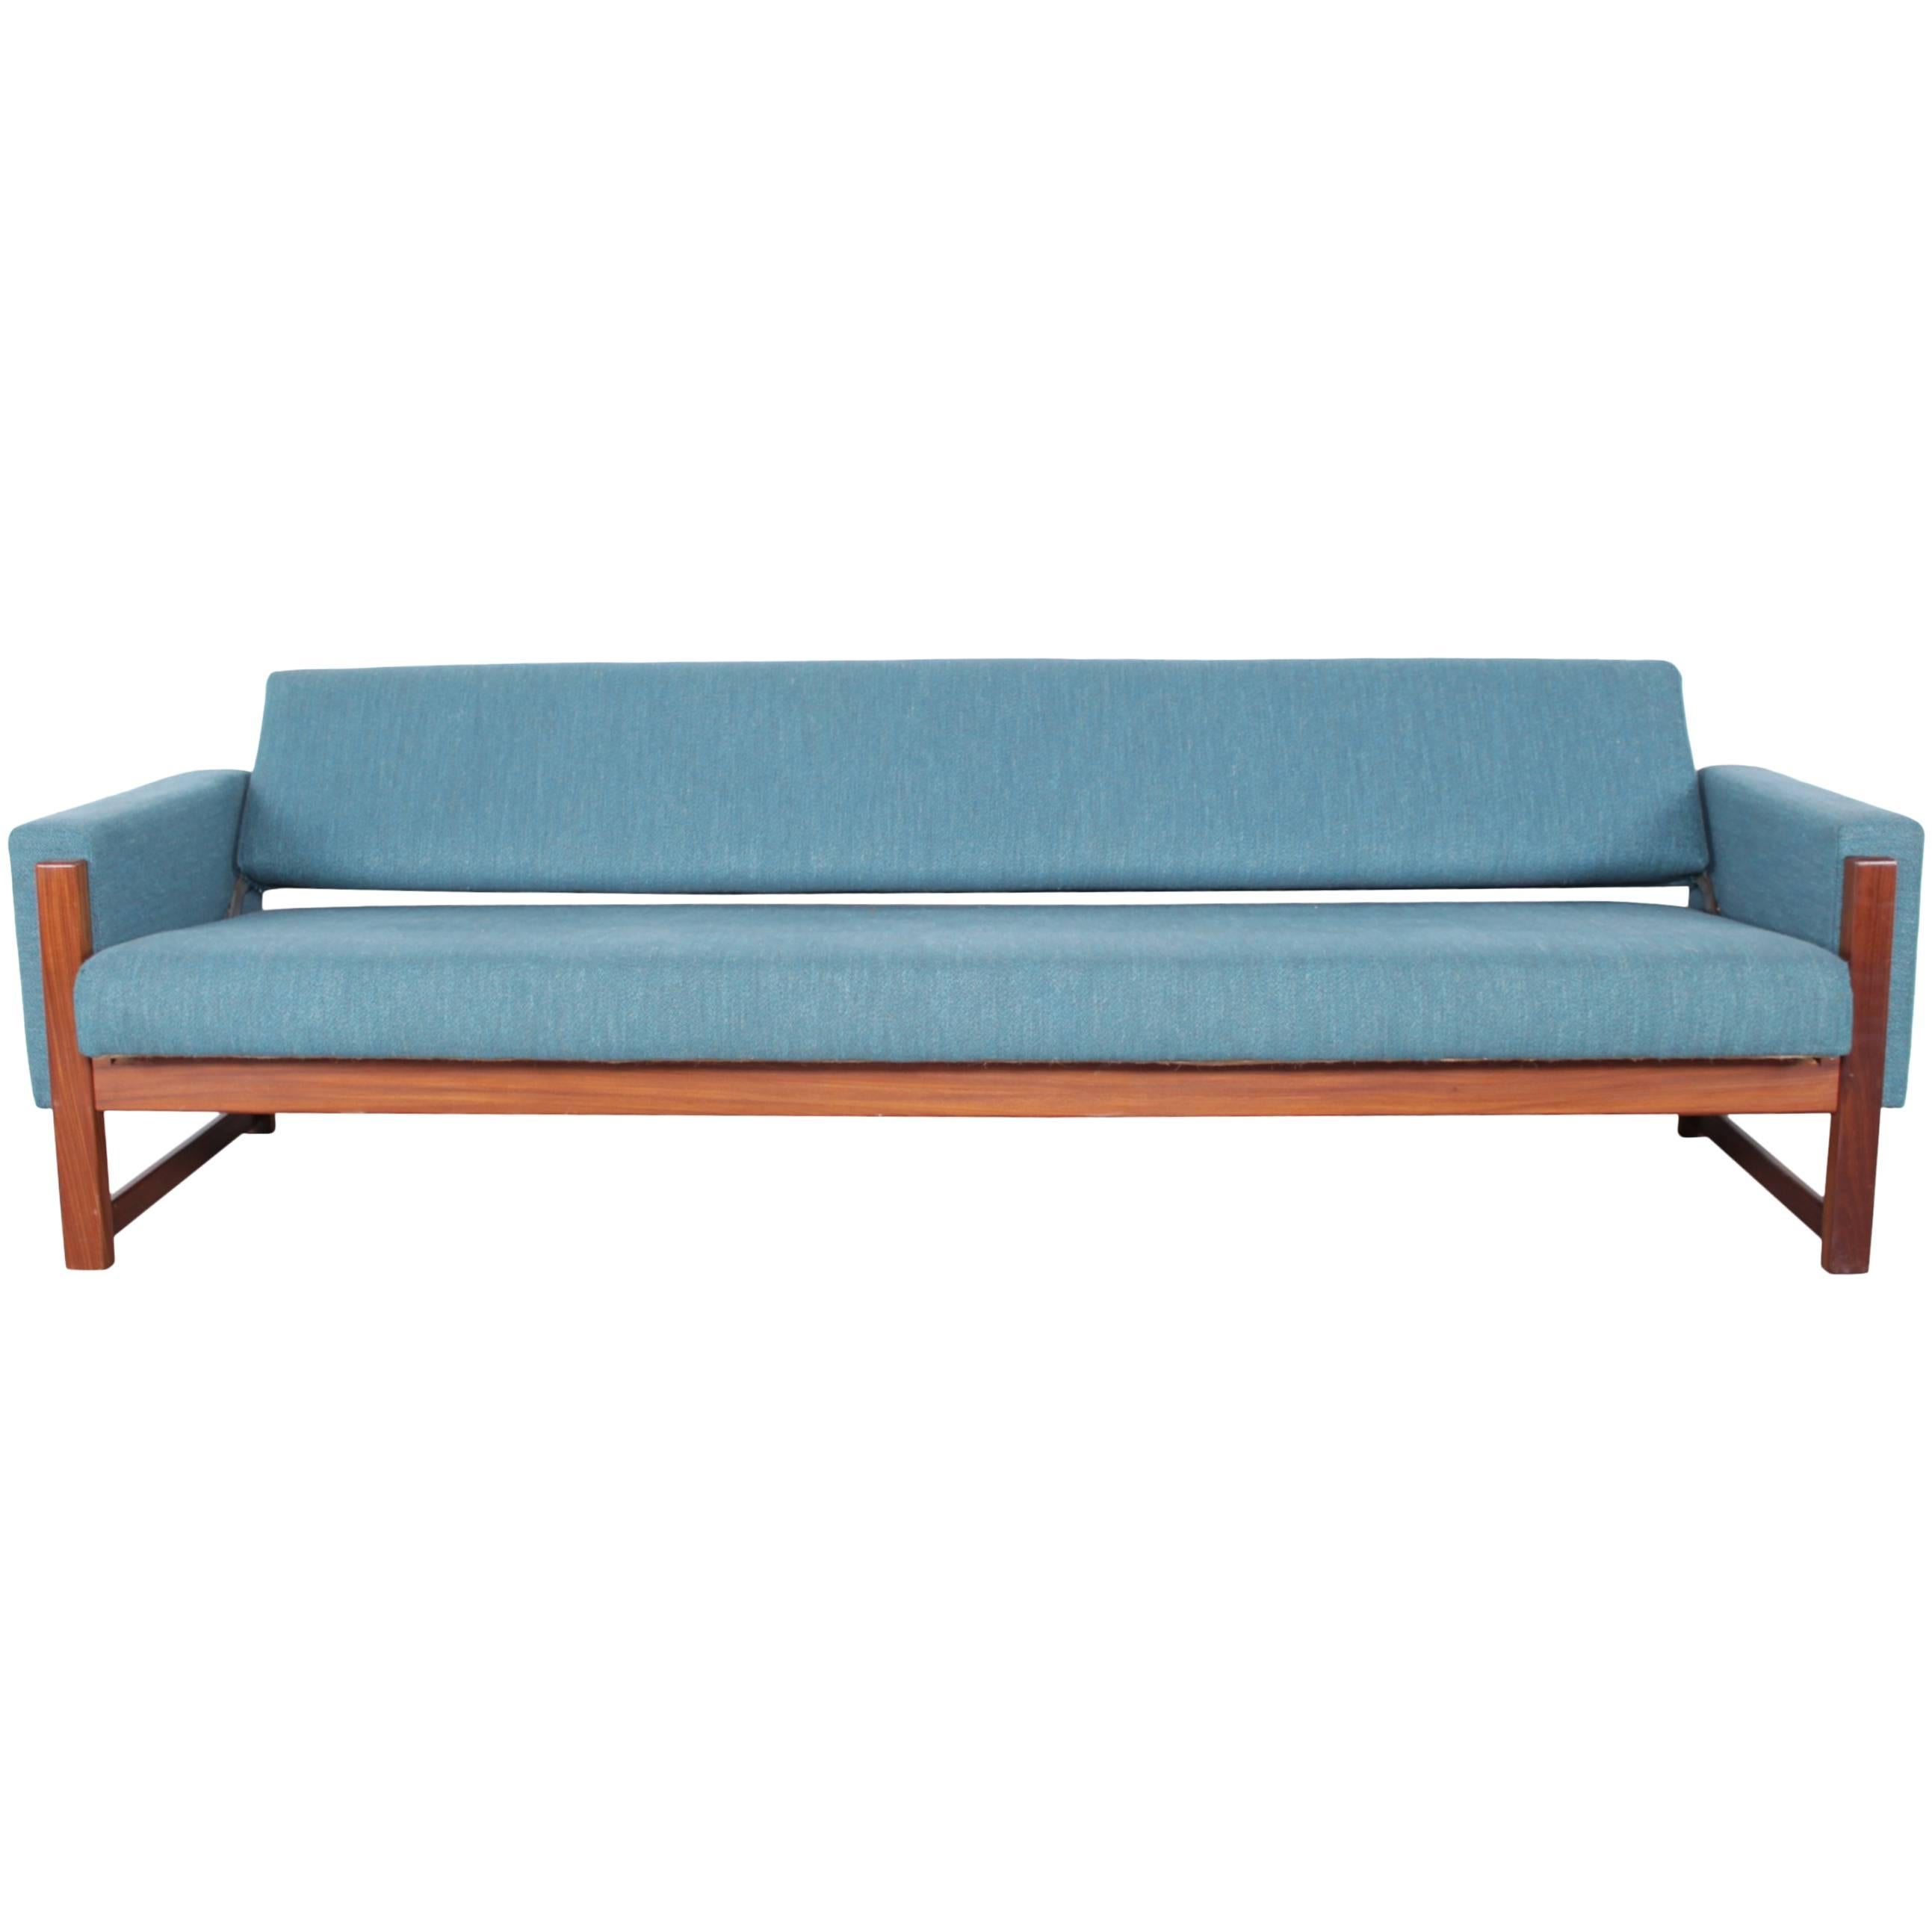 Three-Seat Sofa Bed by Yngve Ekström for Pastoe